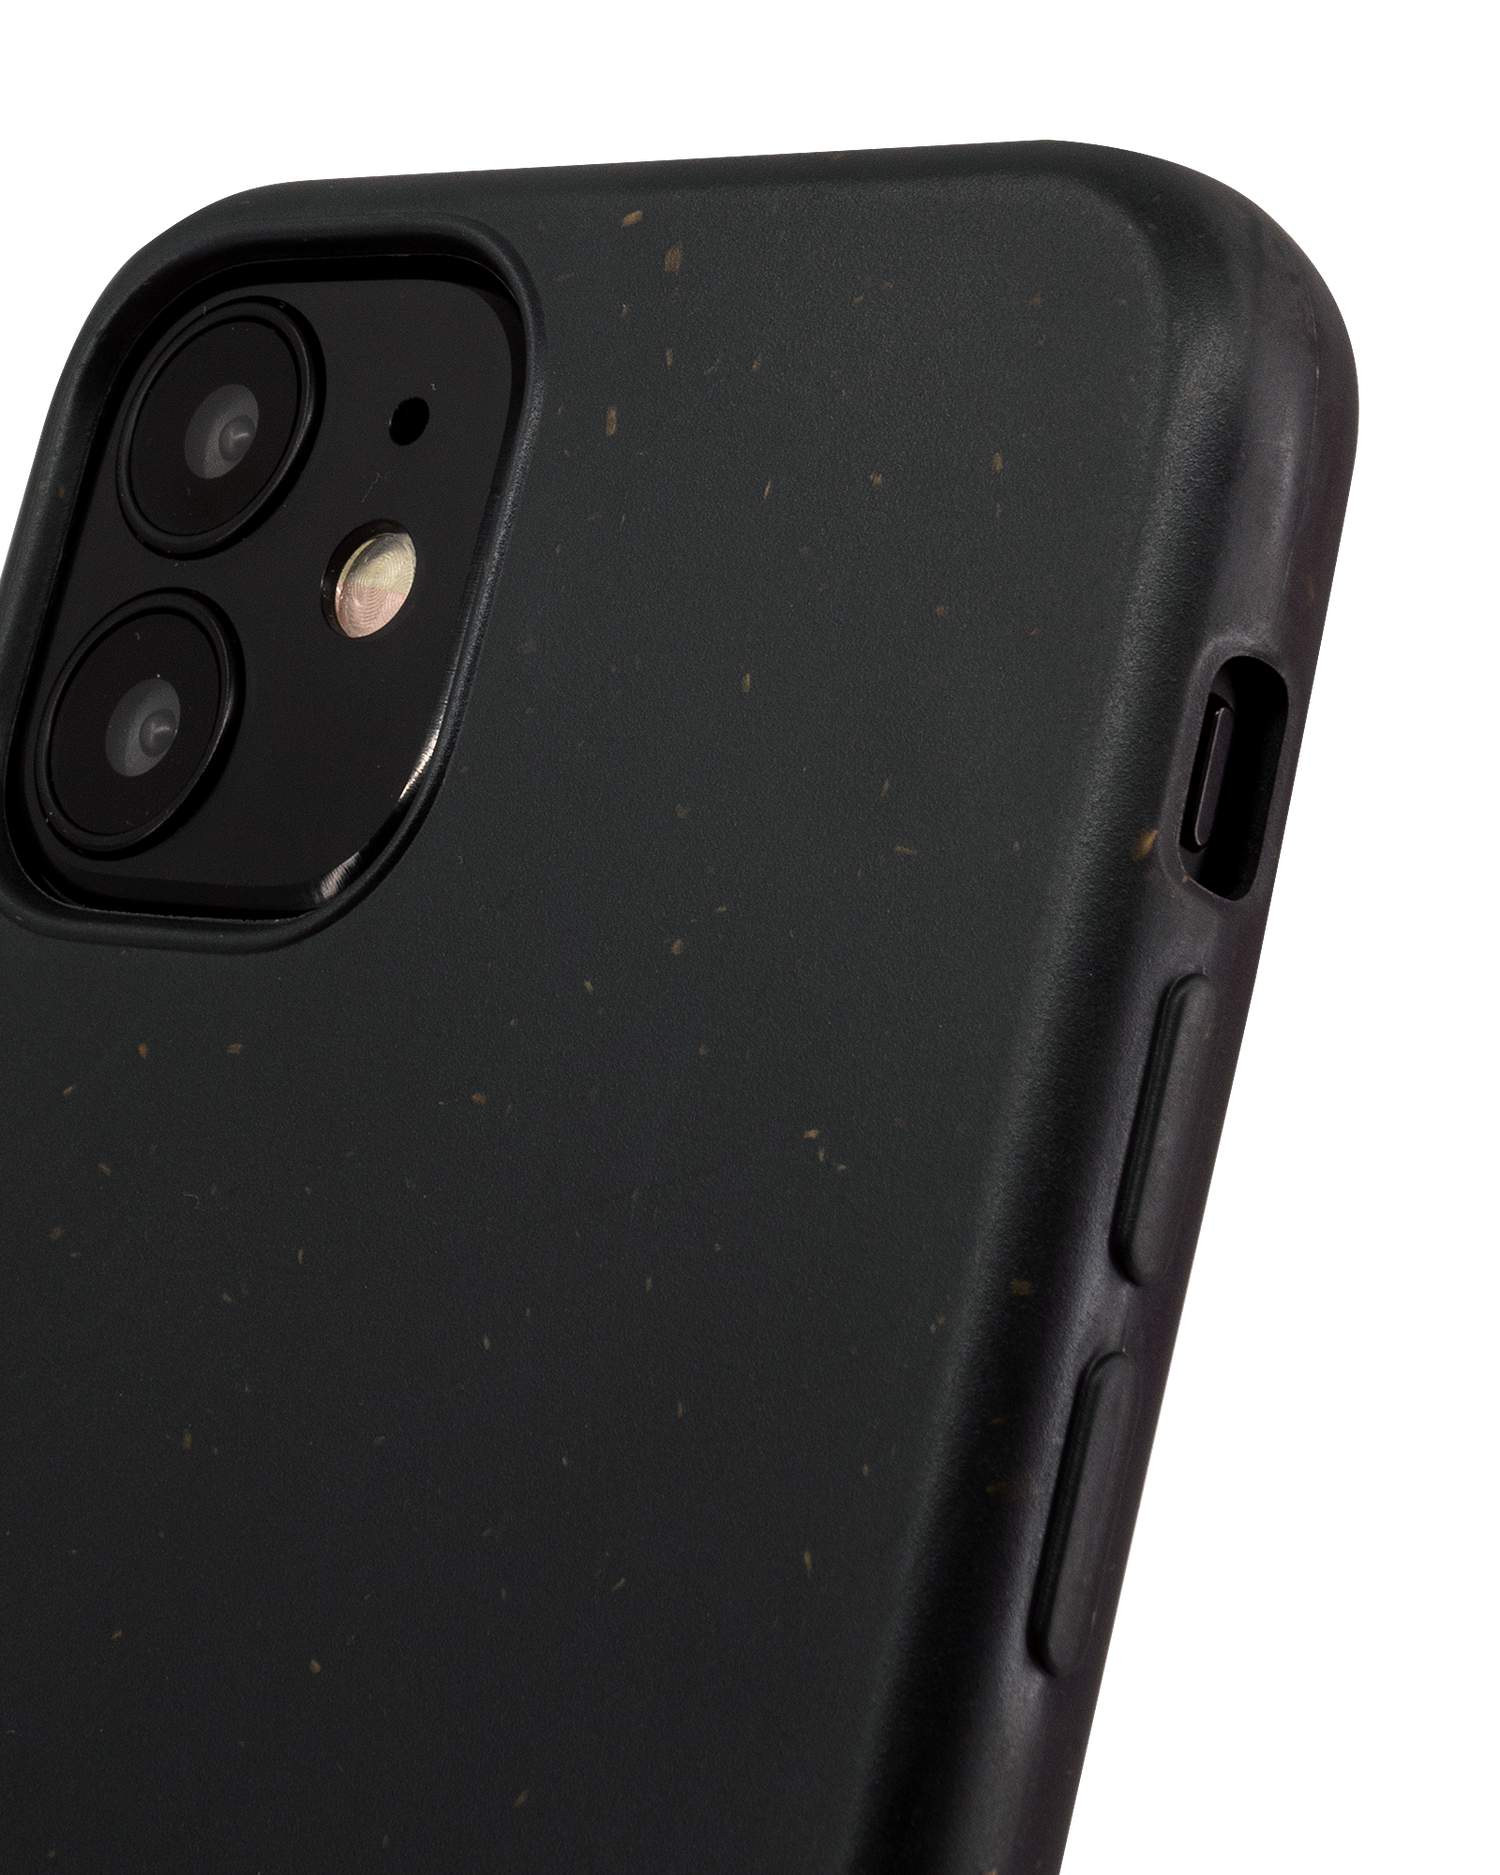 Black Eco-Friendly Phone Case for Apple iPhone 12 mini: Details inside